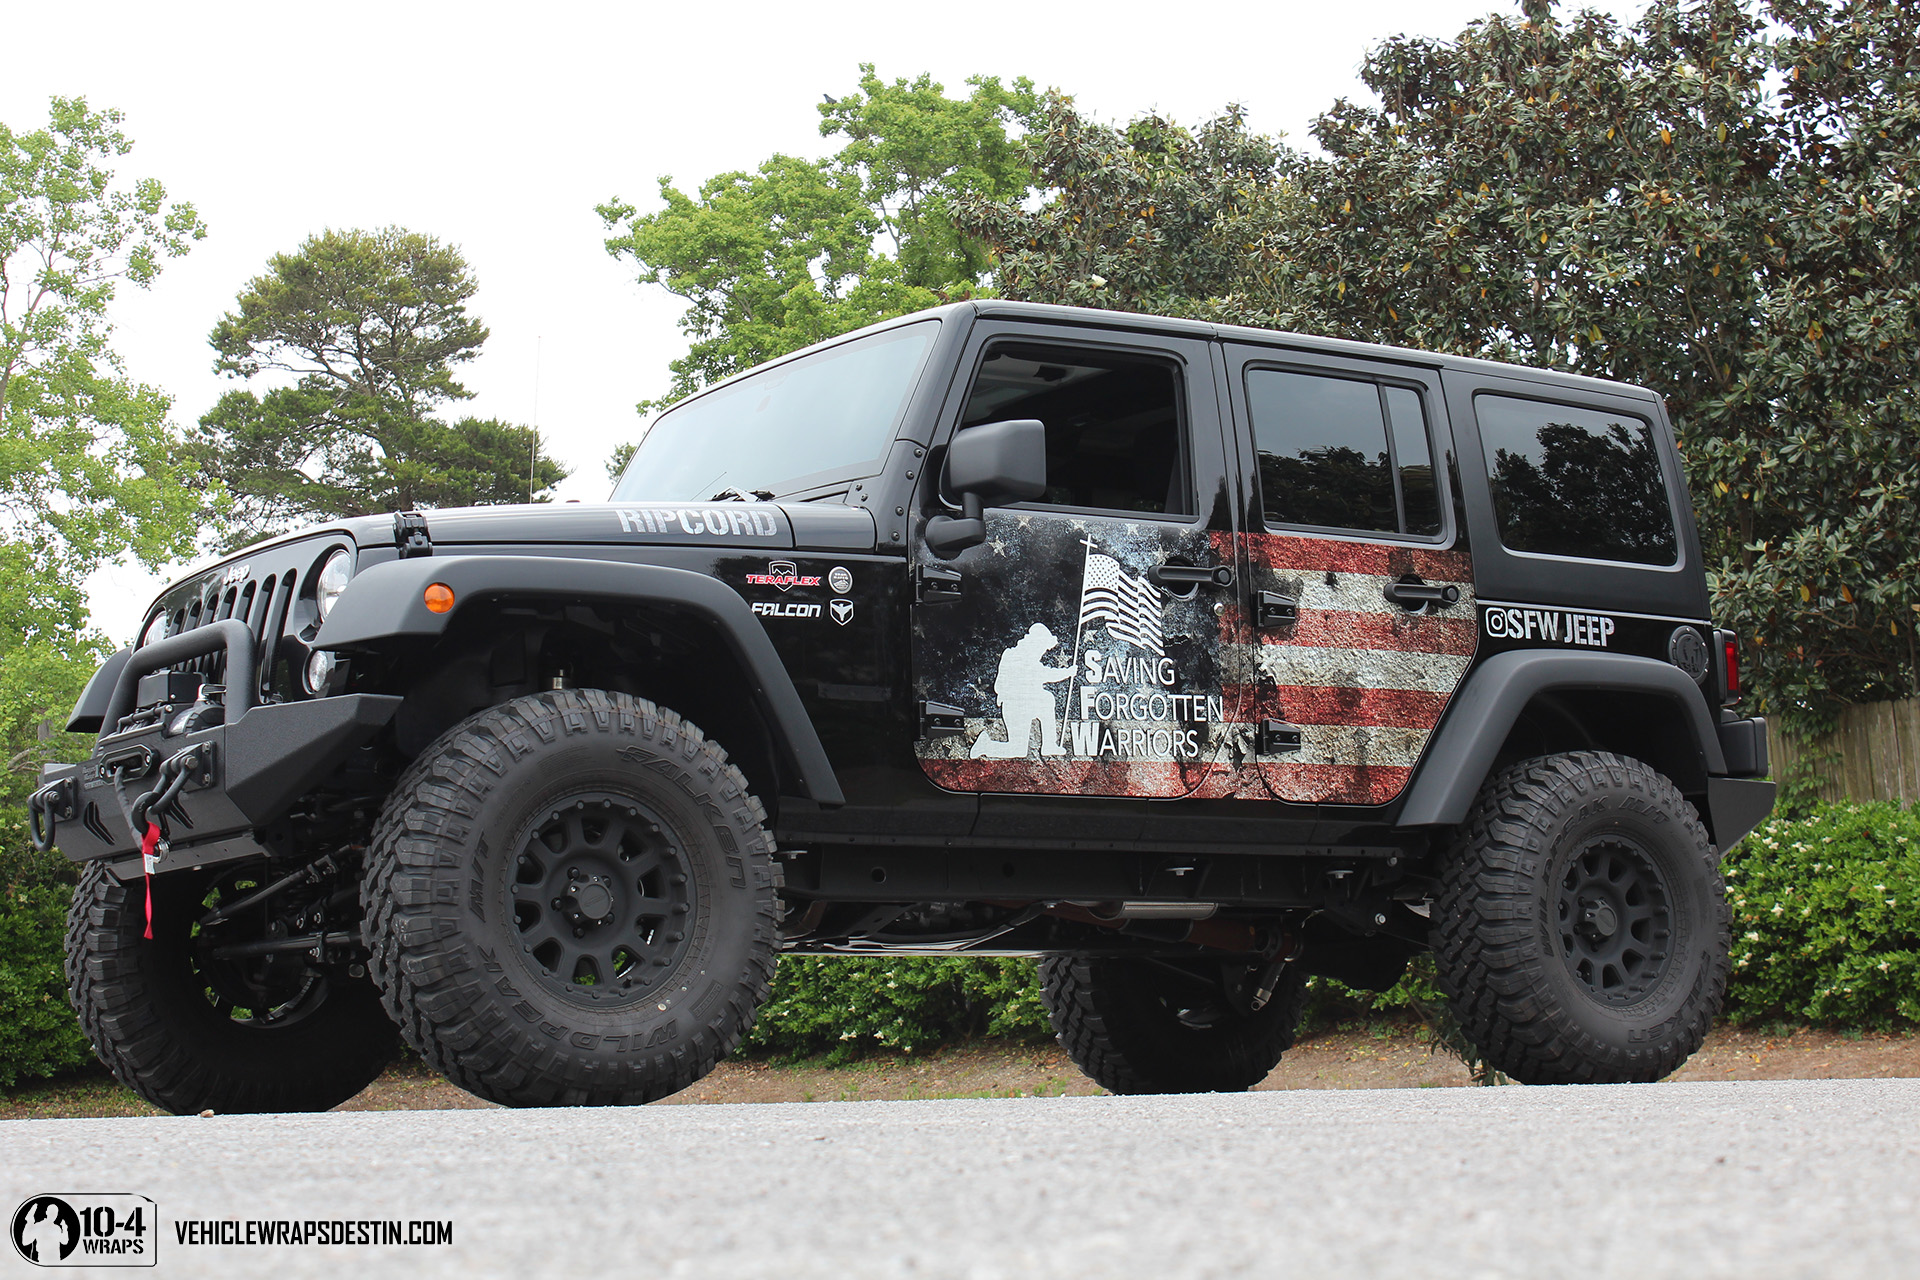 Total 93+ imagen jeep wrangler american flag - Abzlocal.mx